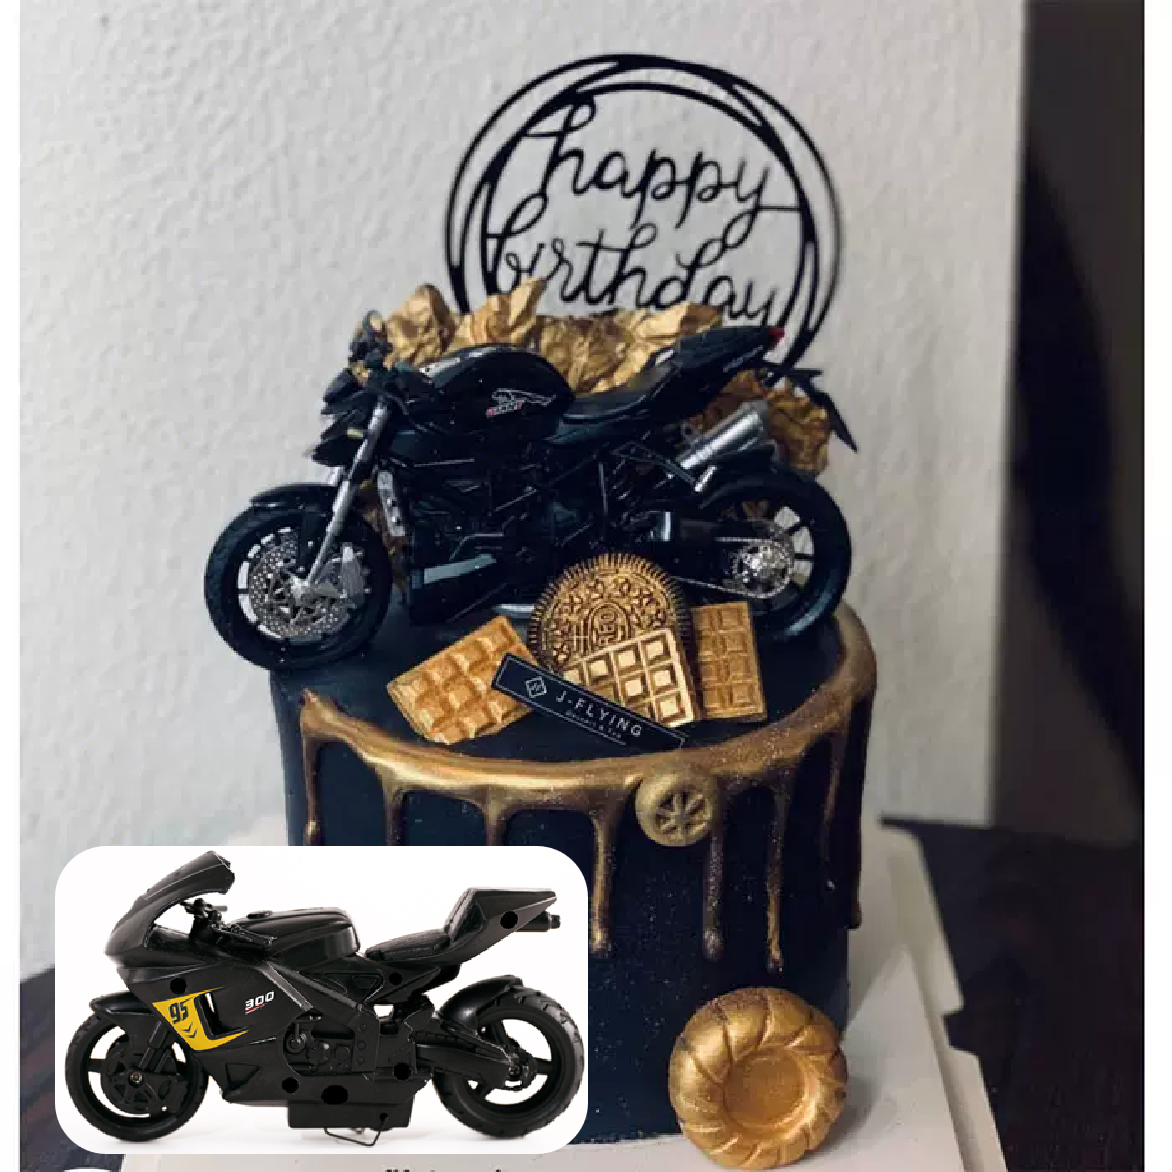 Cake Topper, Cake Decorations -  Motorcycle 'street bike' - black (Large) - Rampant Coffee Company